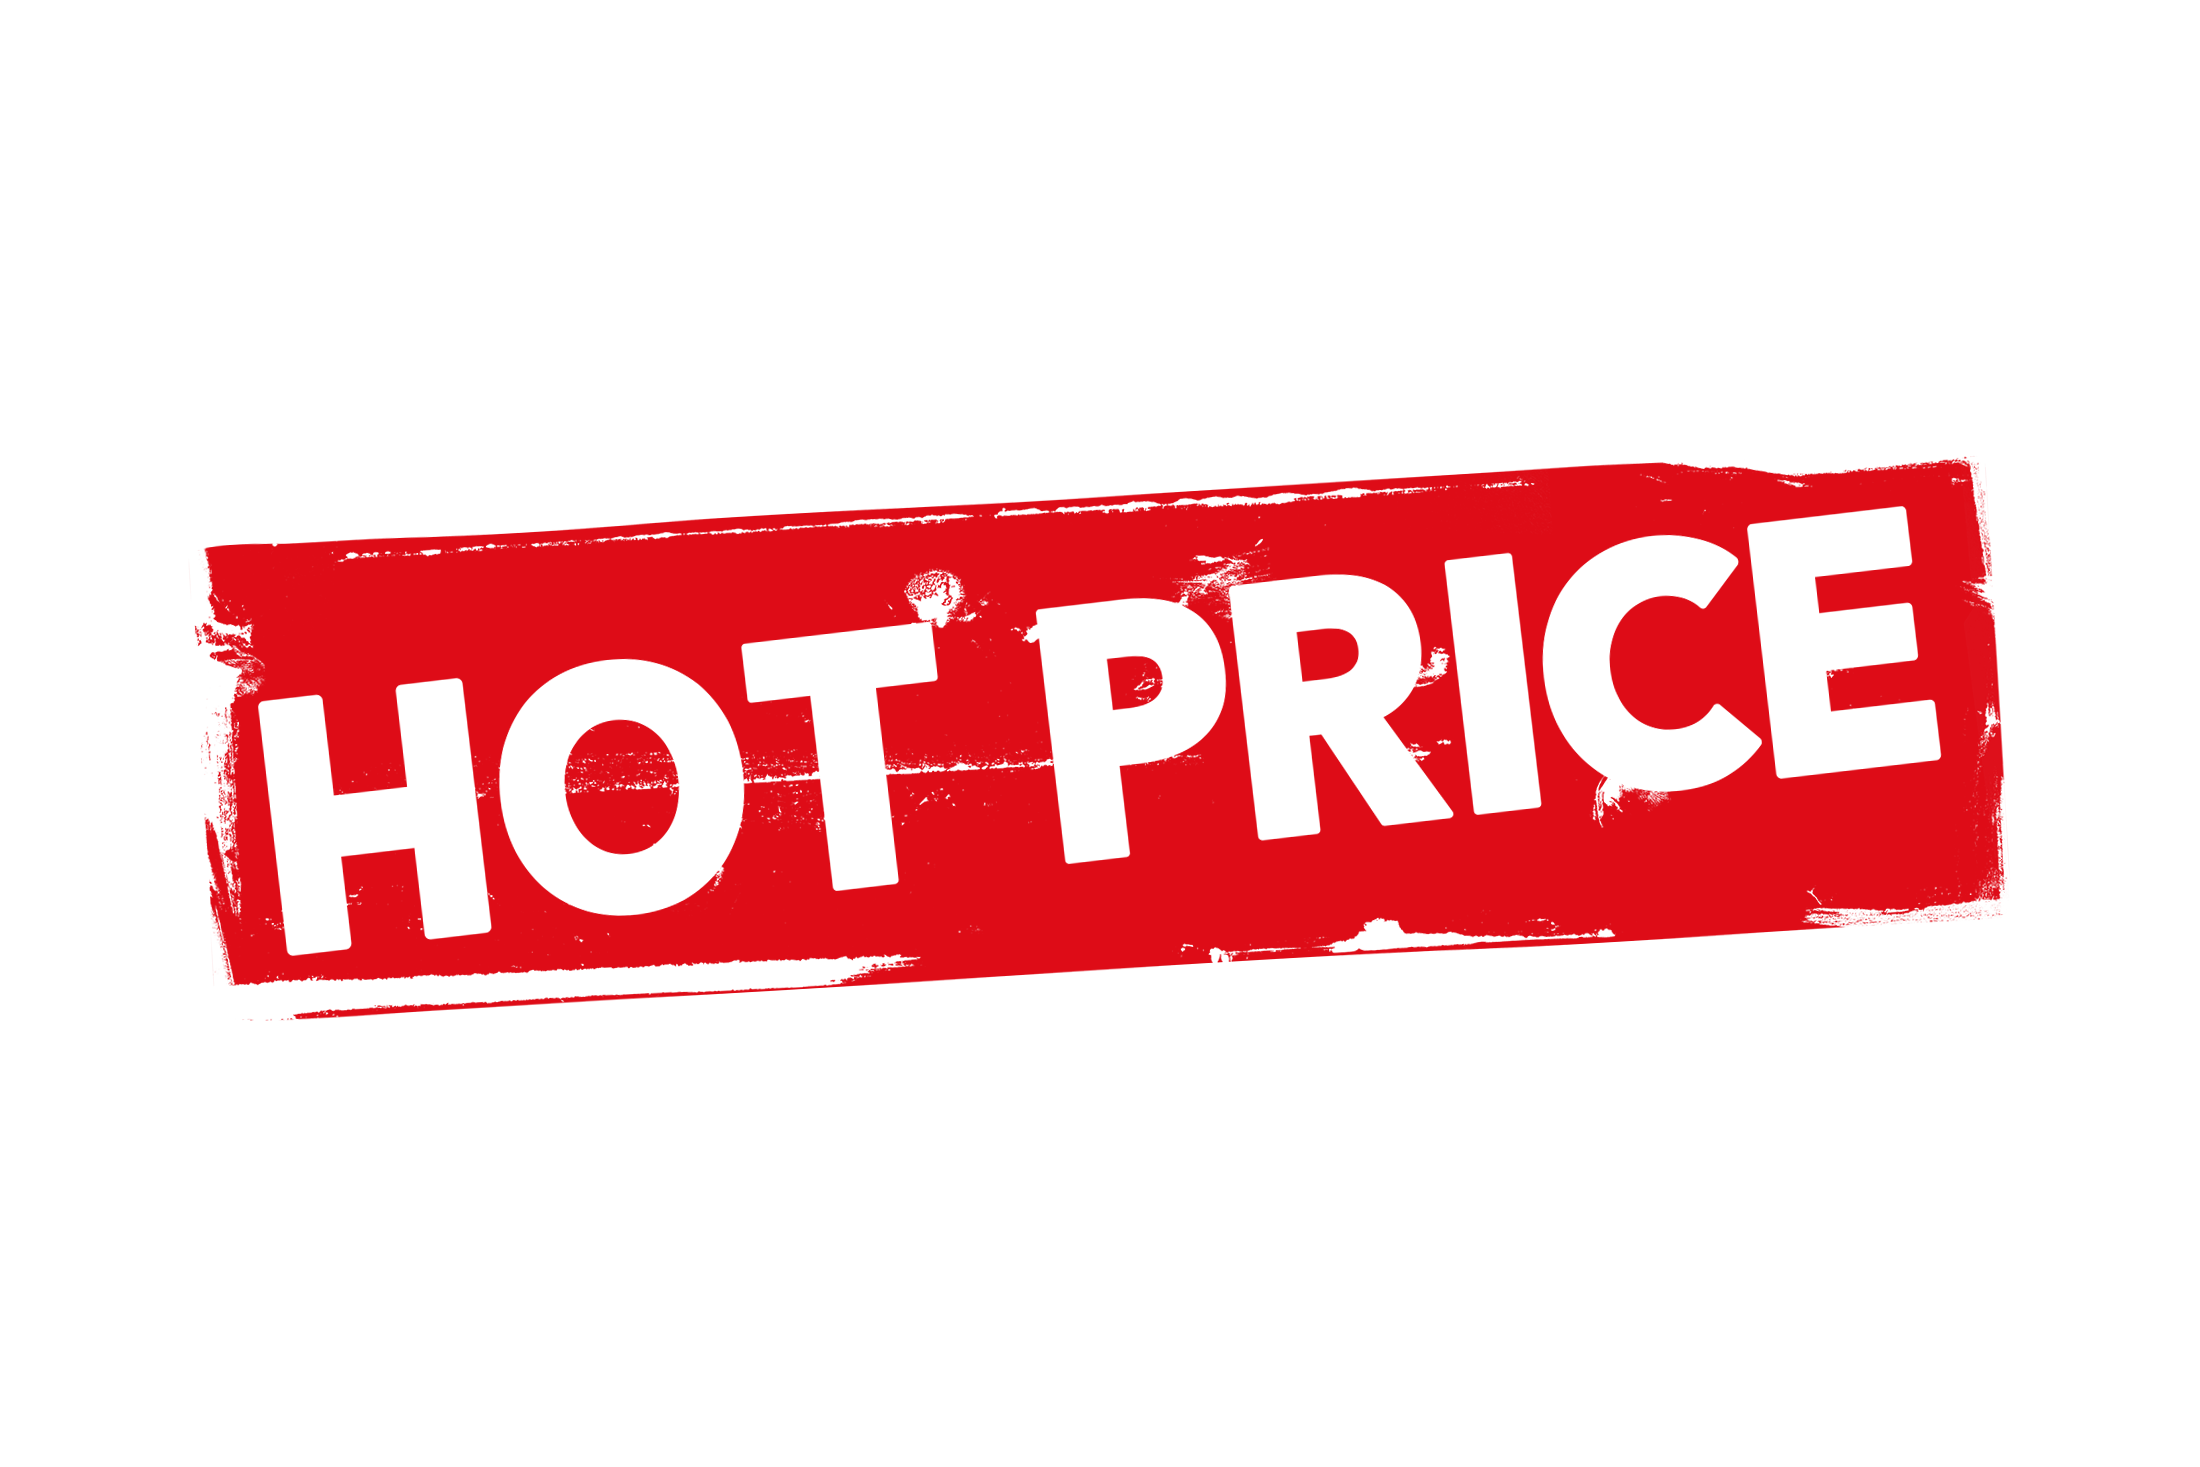 Grunge hot price label PSD